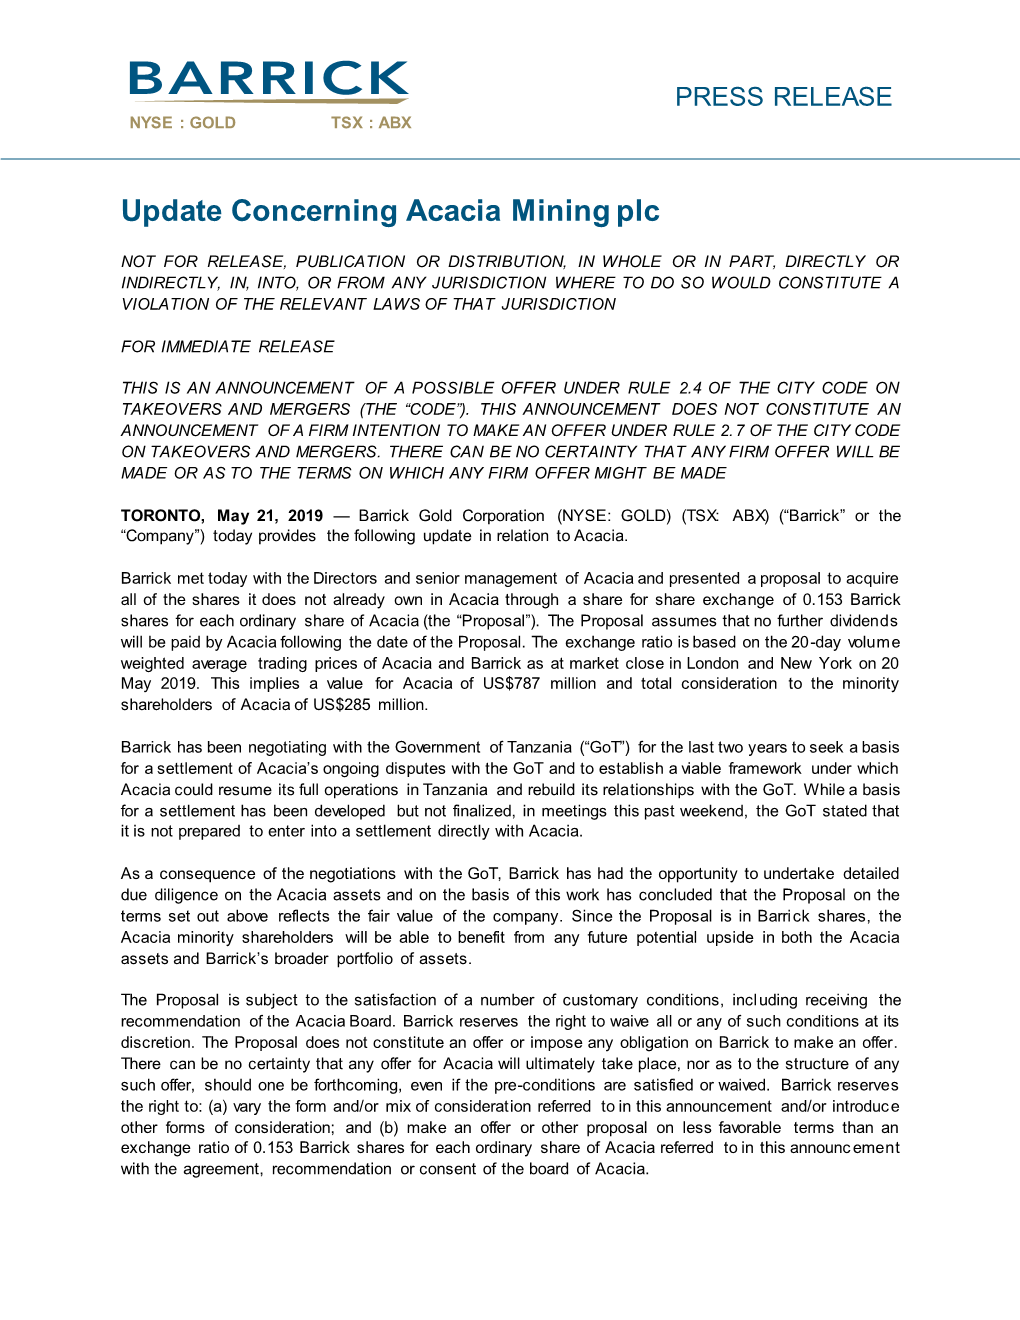 Update Concerning Acacia Mining Plc